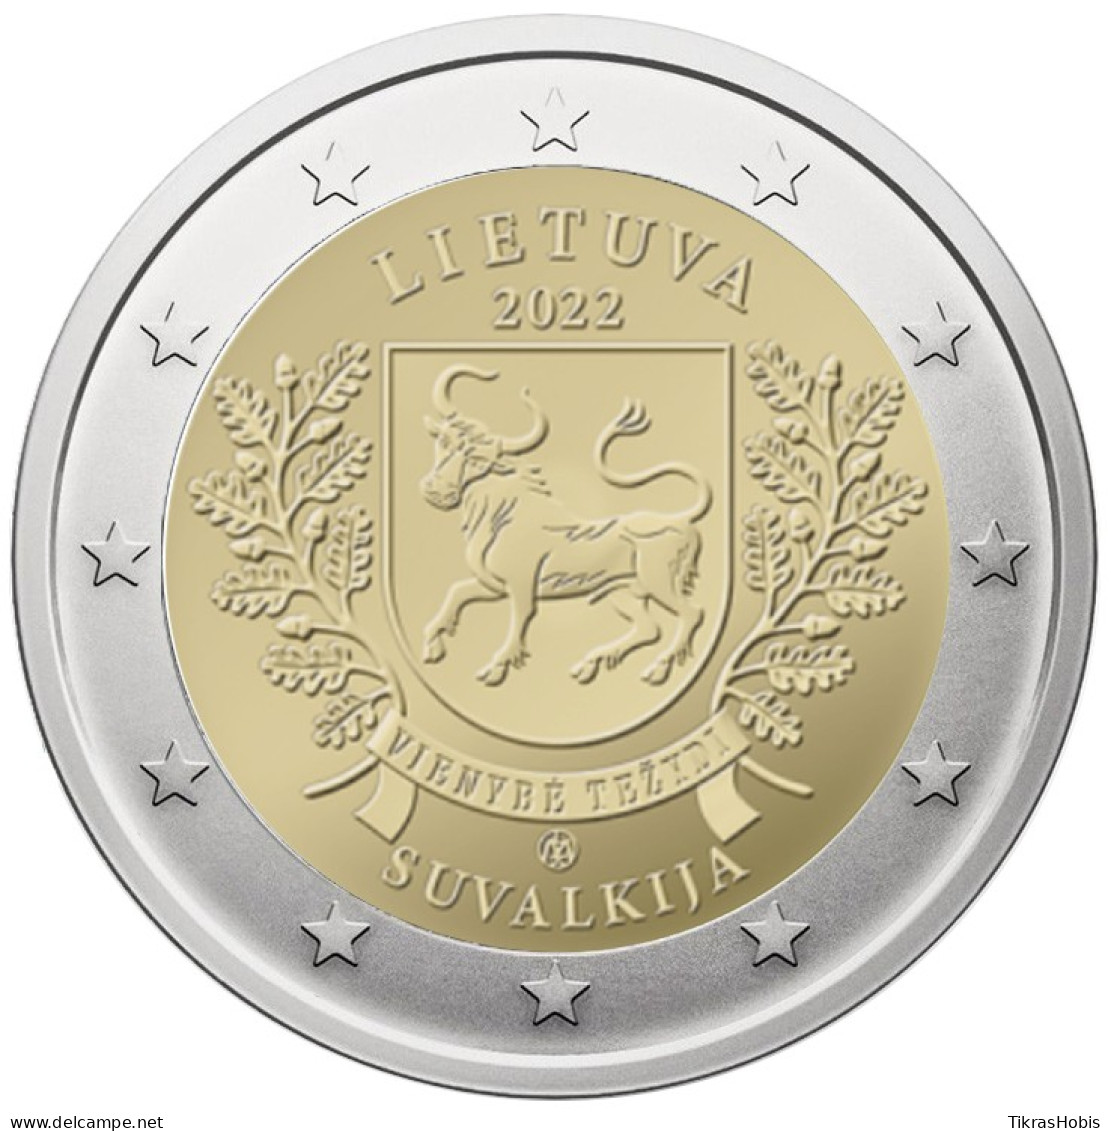 Lithuania 2 Euro, 2022 Suvalkija - Lituanie